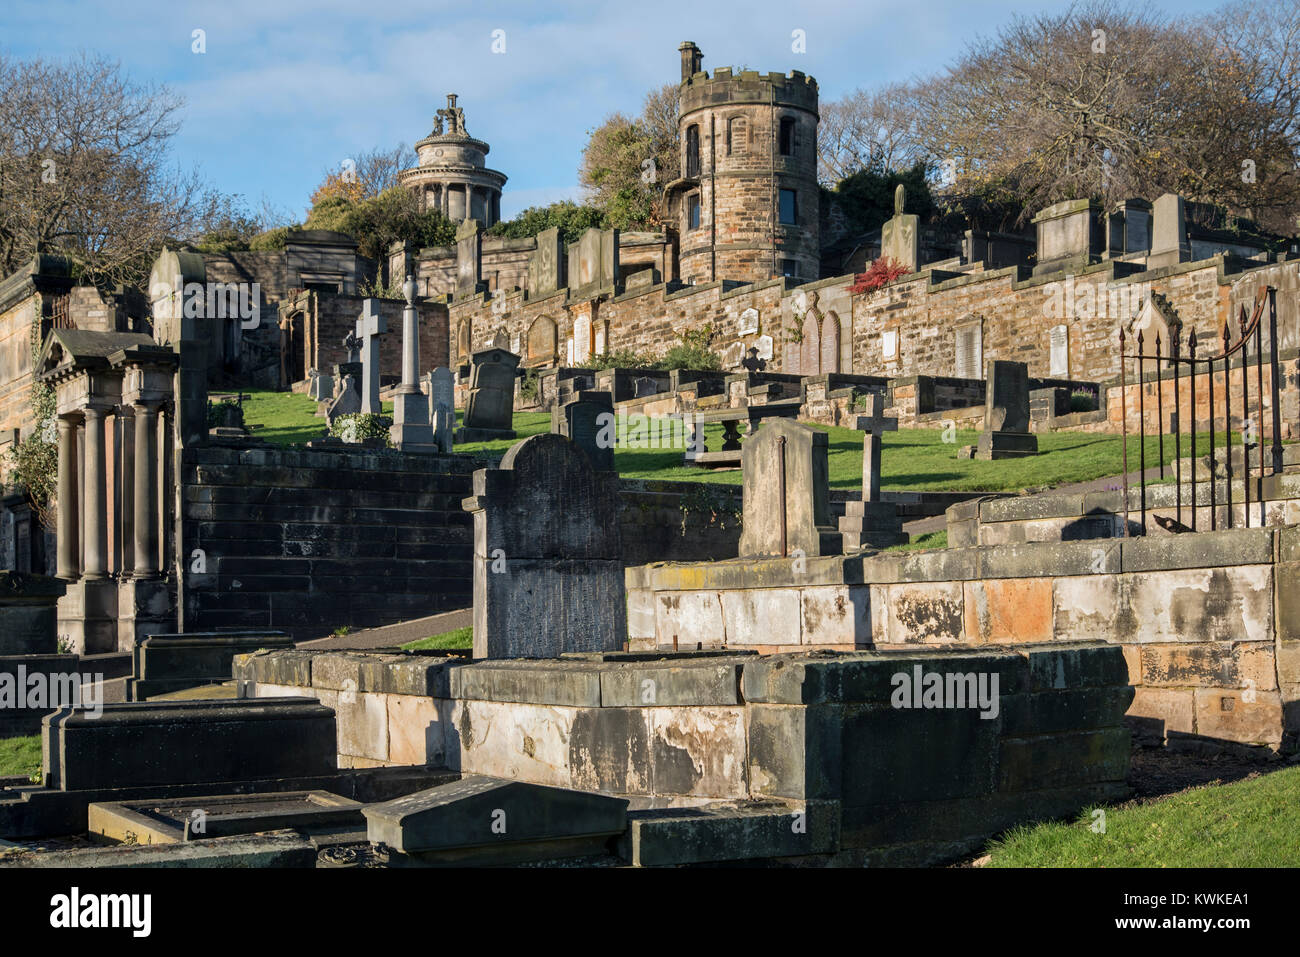 New Calton Burial Ground, Edinburgh, Scotland, UK. Stock Photo